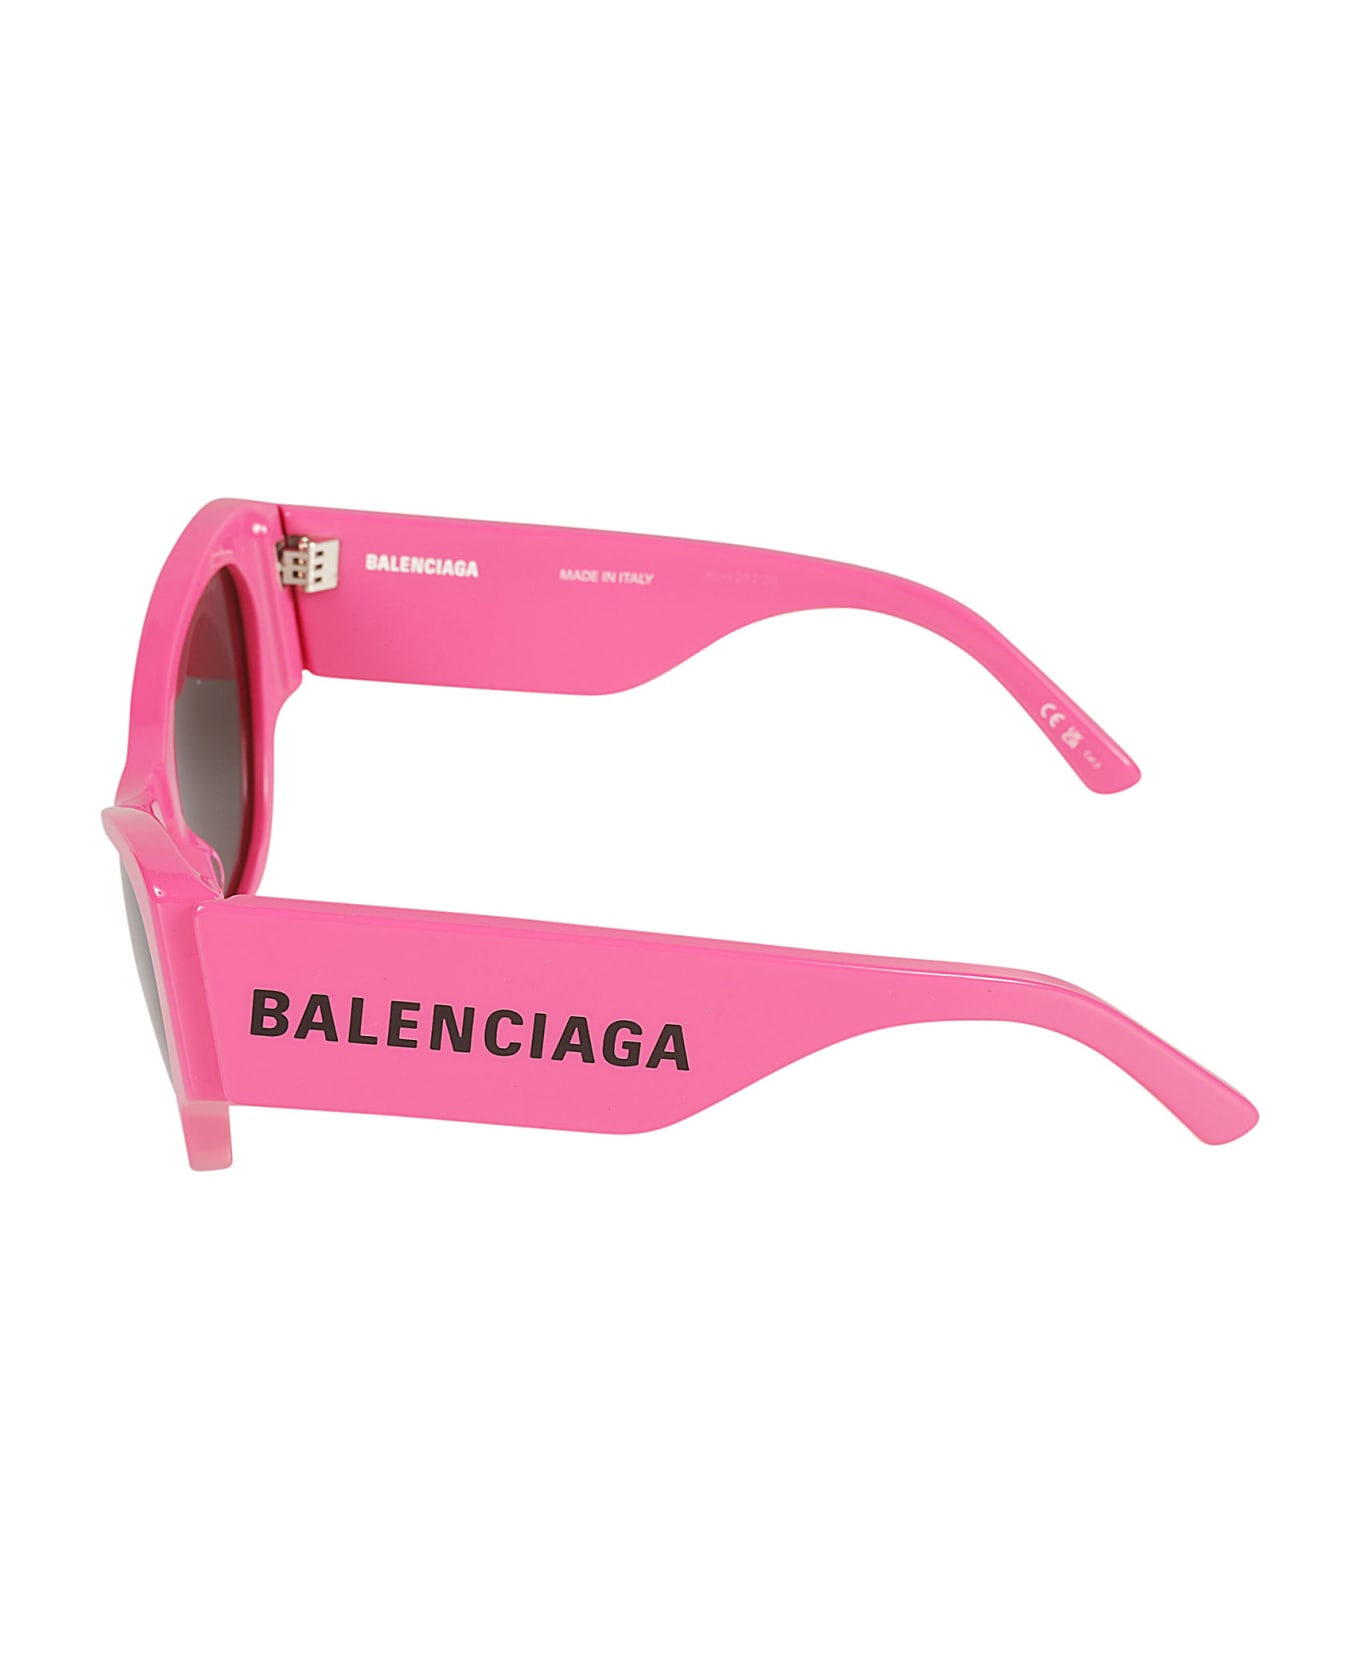 Balenciaga Eyewear Logo Sided Sunglasses - Fuchsia/Grey サングラス